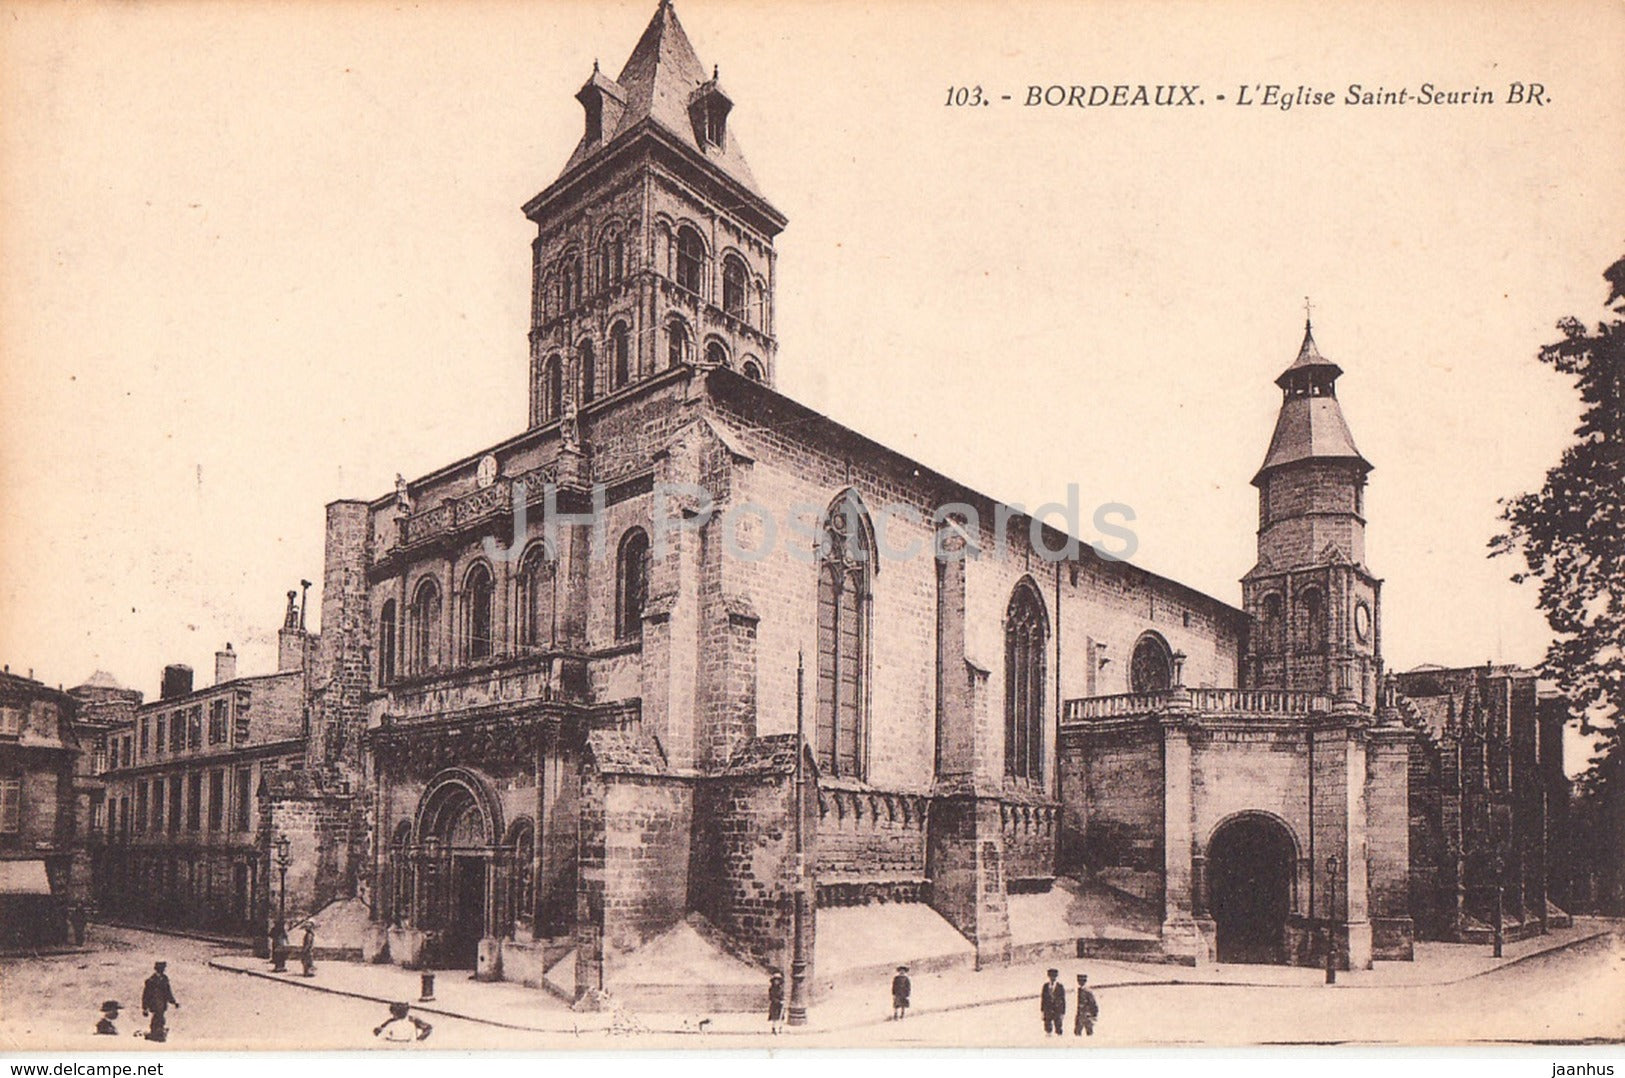 Bordeaux - L'Eglise Saint Seurin - church - 103 - old postcard - France - used